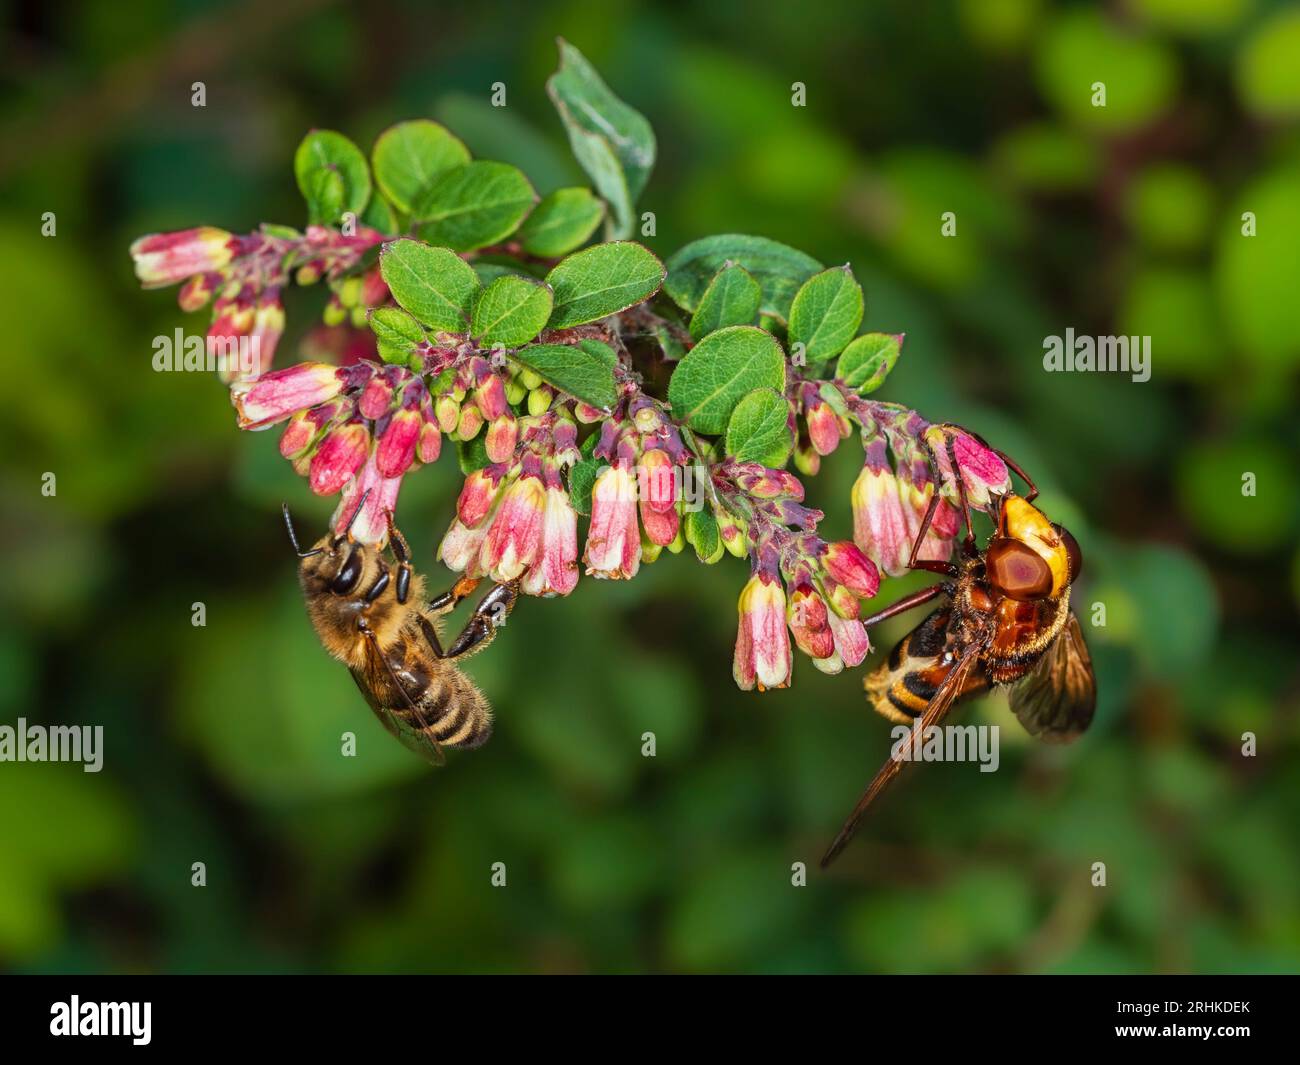 Female hornet mimic UK hoverfly, Volucella zonaria, feeding with a honey bee, Apis mellifera, on snowberry flowers Stock Photo